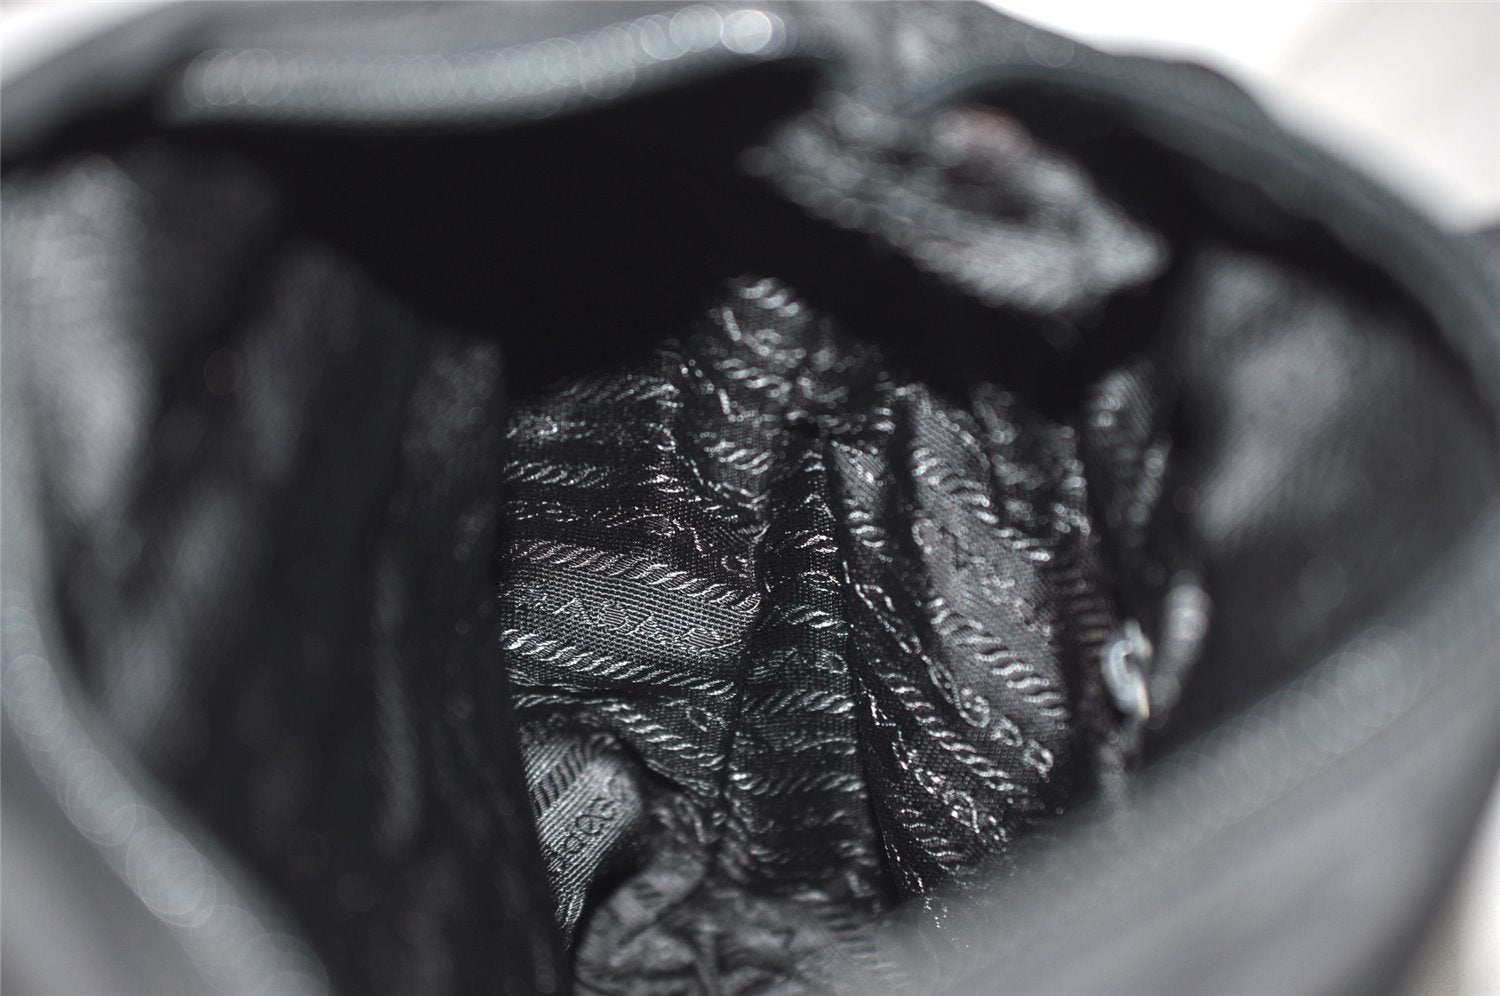 Authentic PRADA Vintage Nylon Tessuto Shoulder Tote Bag Purse Black 9314J